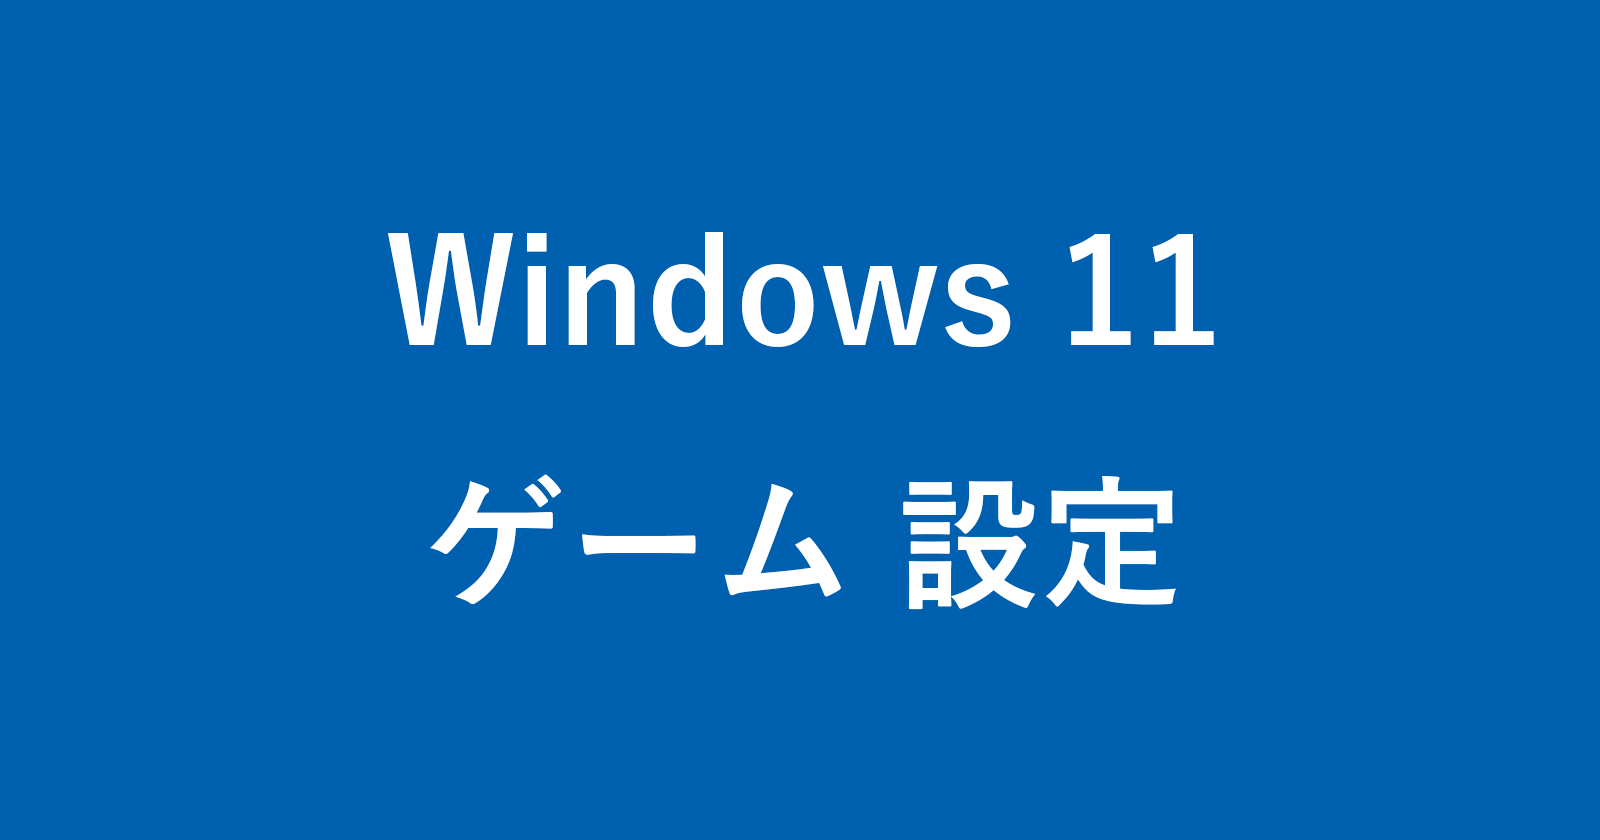 windows 11 game settings